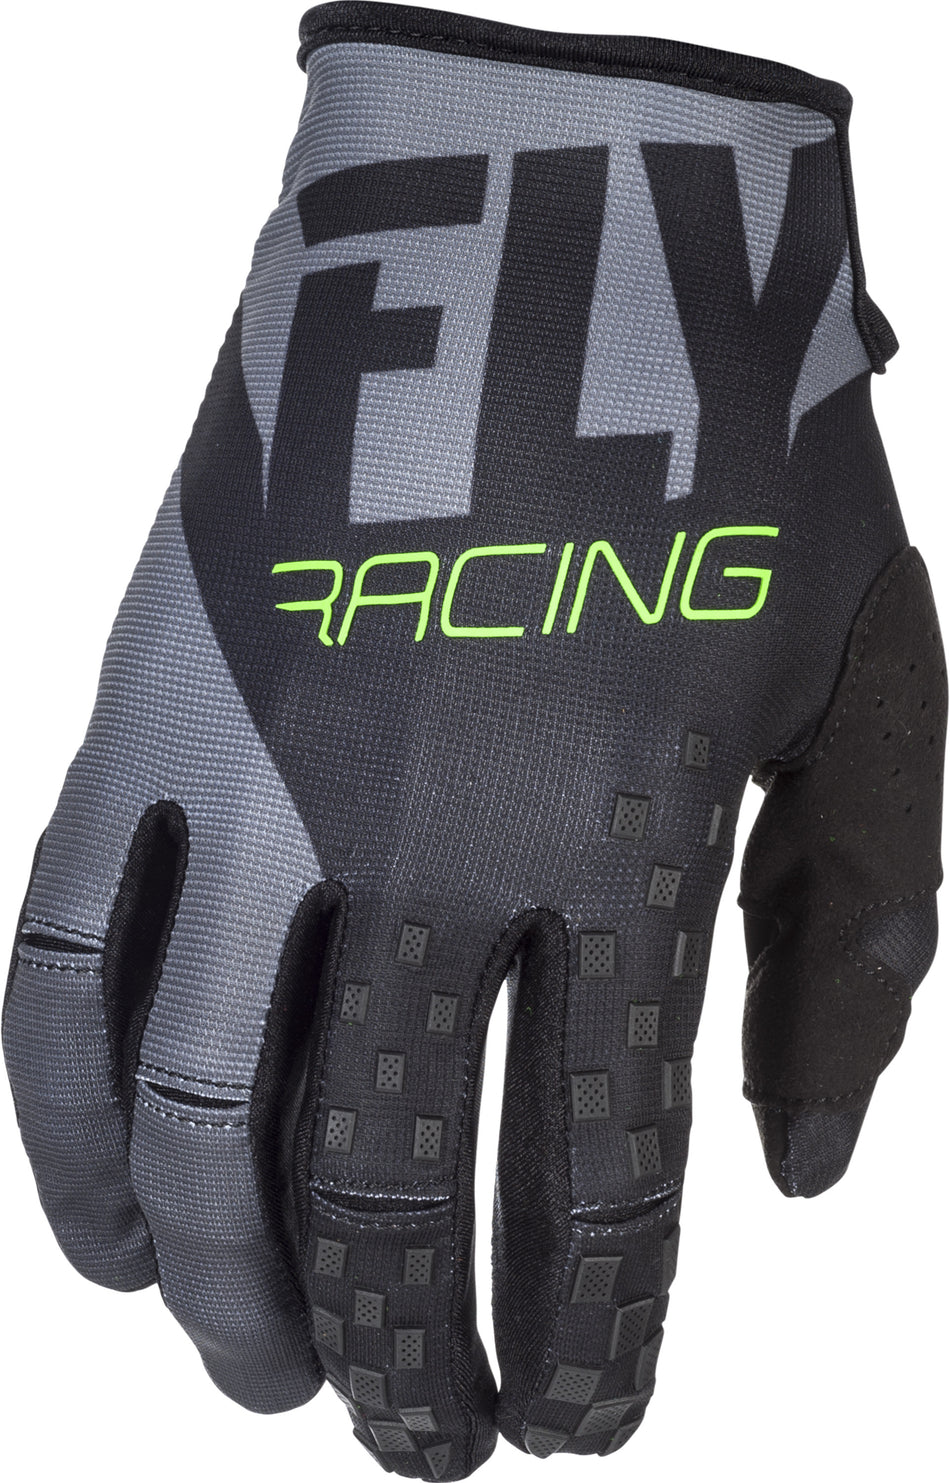 FLY RACING Kinetic Gloves Black/Grey Sz 4 371-41004